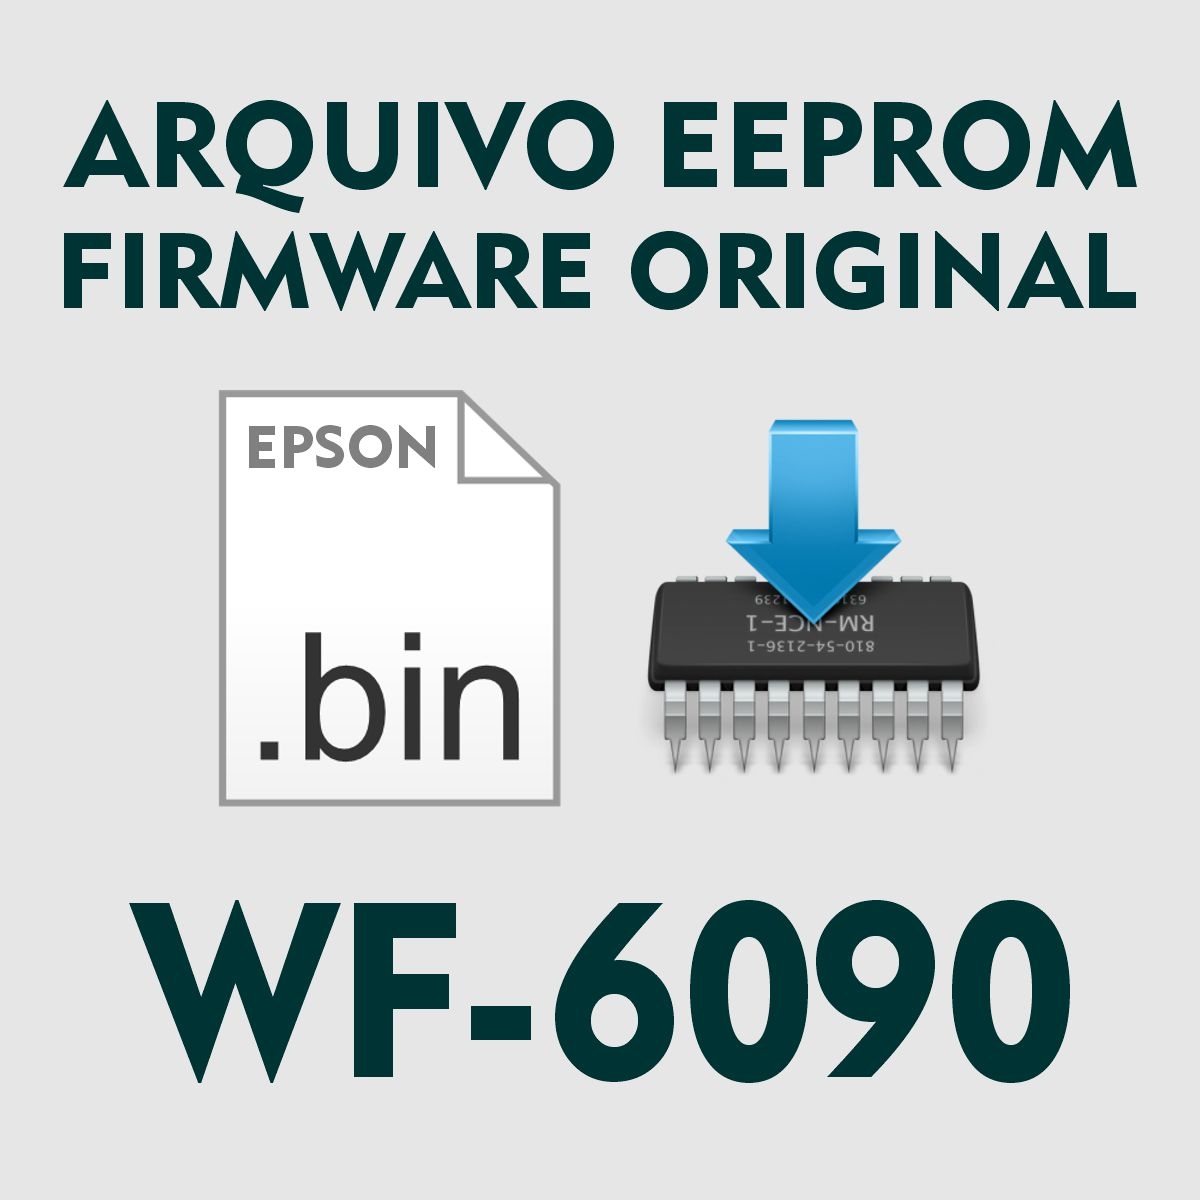 Epson WF-6090 | Arquivo de Eeprom Firmware .bin - Original